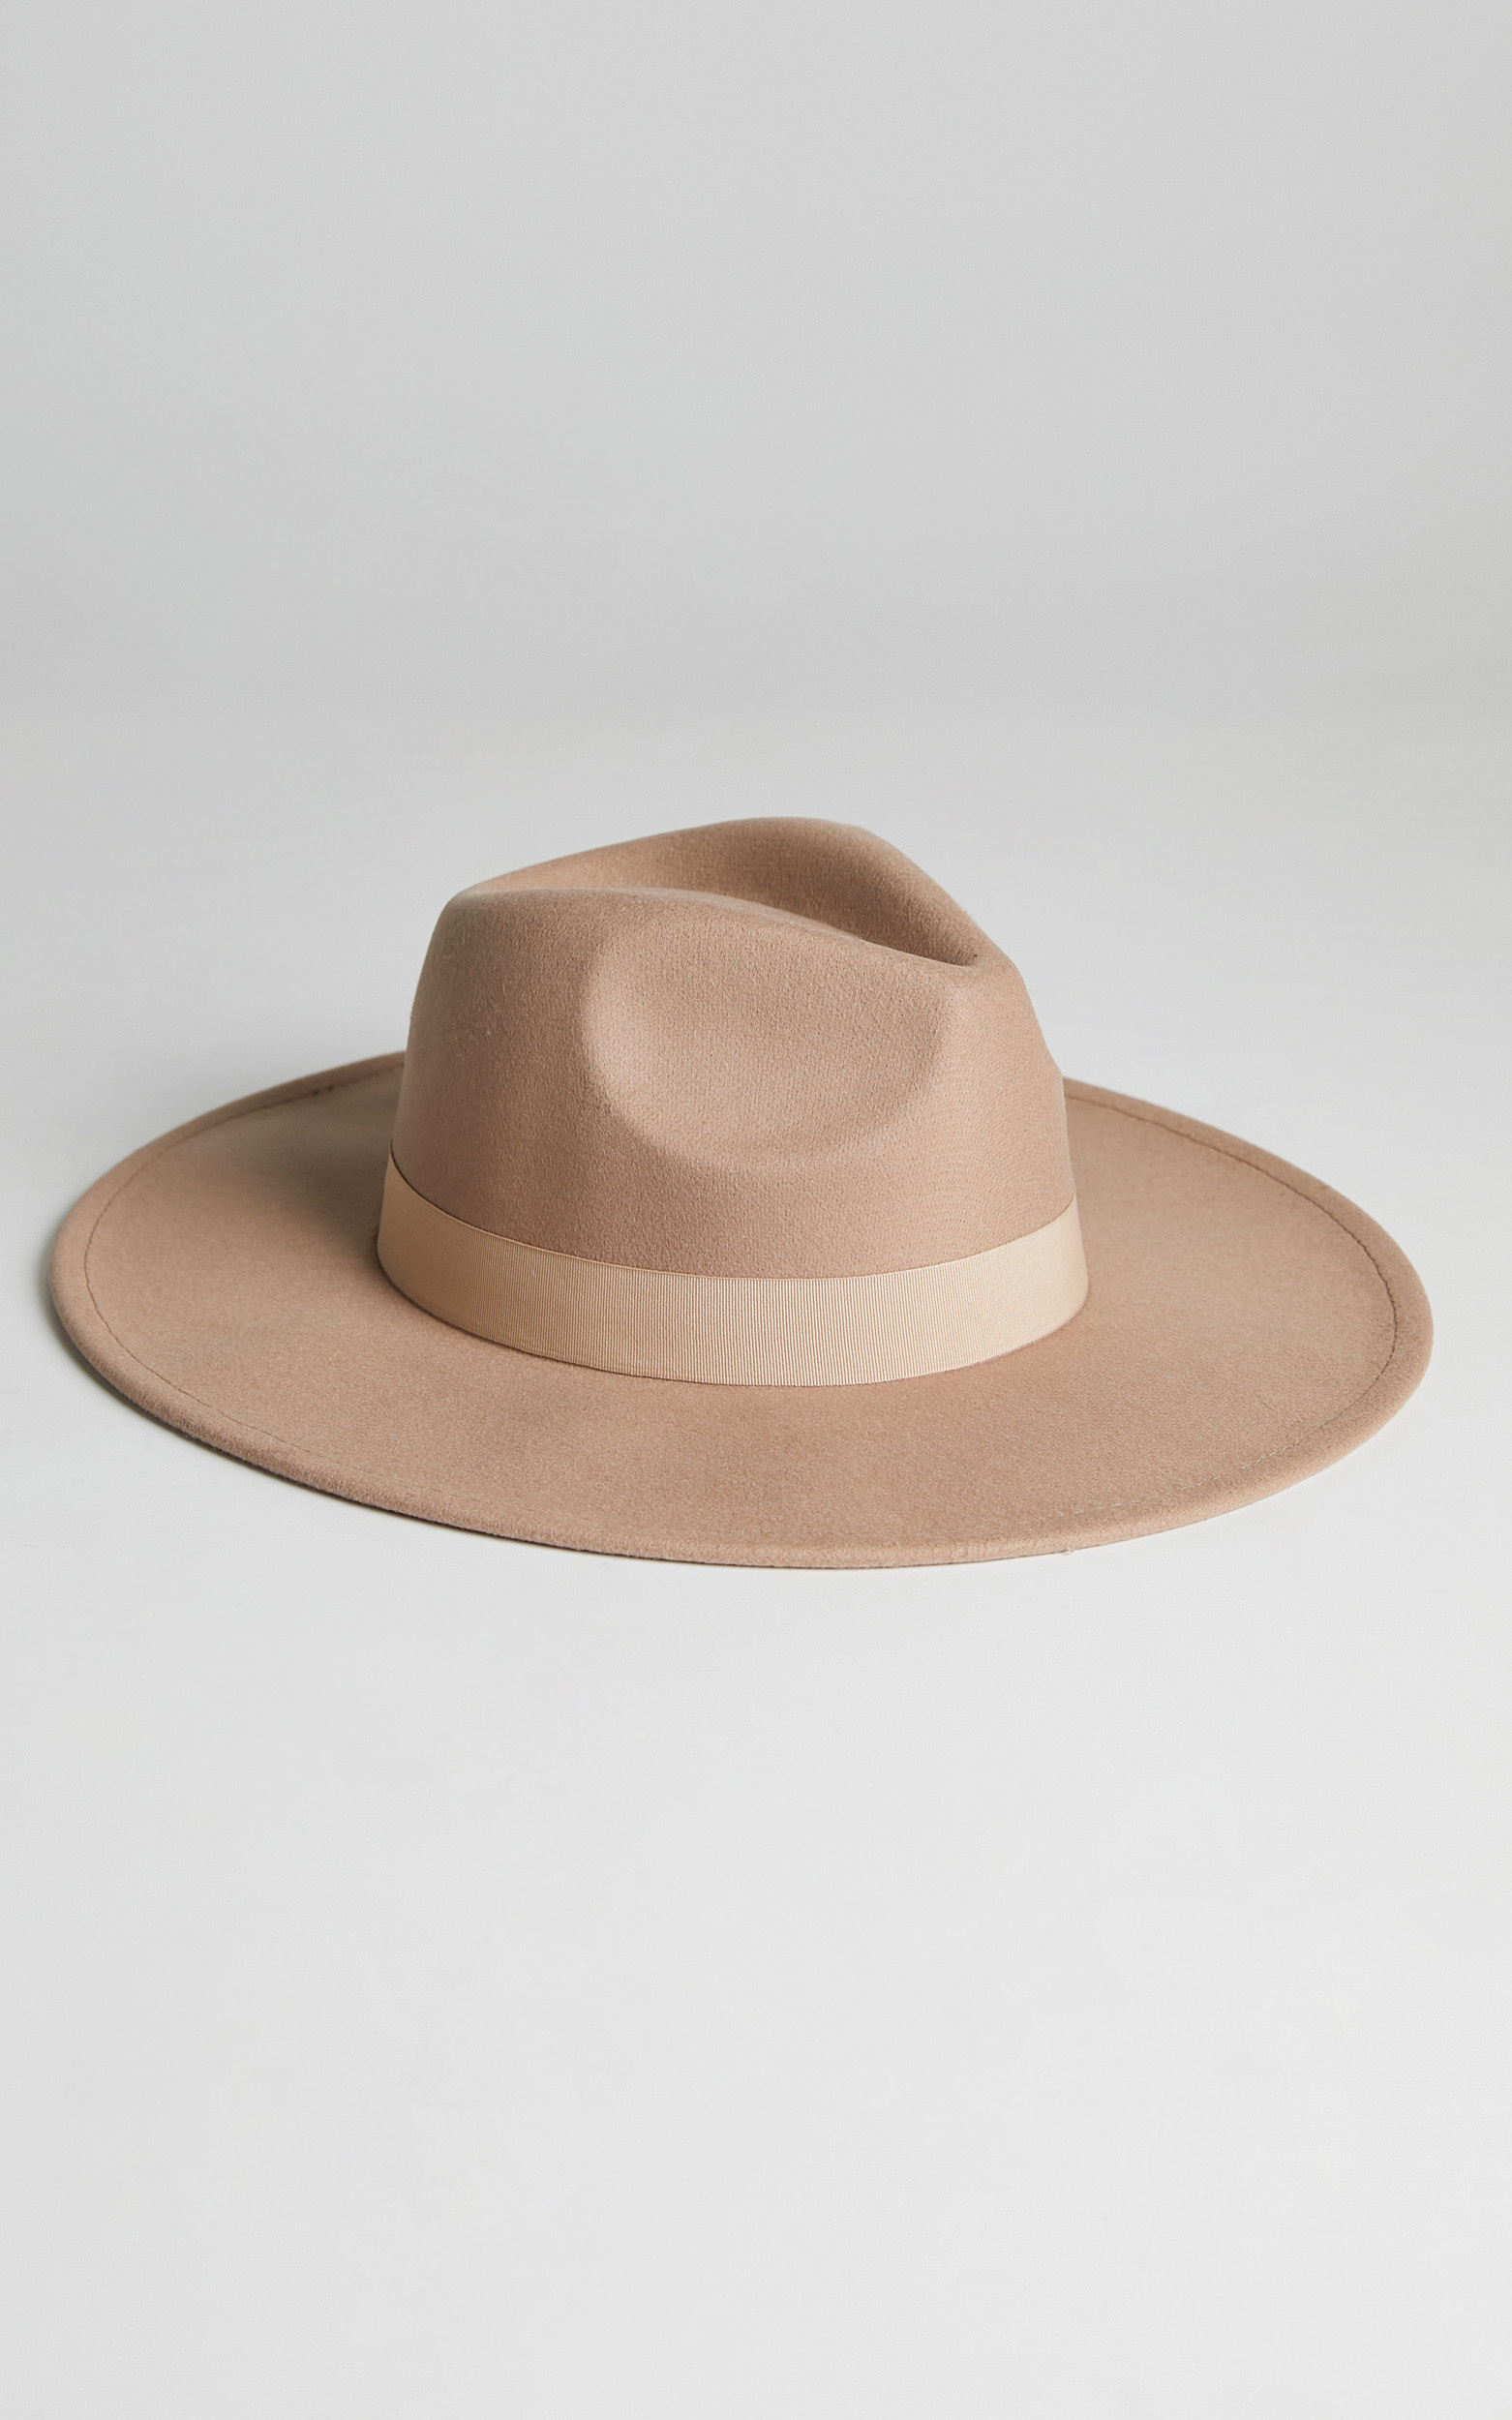 Jazmyne Hat in Milk Chocolate - OneSize, BRN2, hi-res image number null